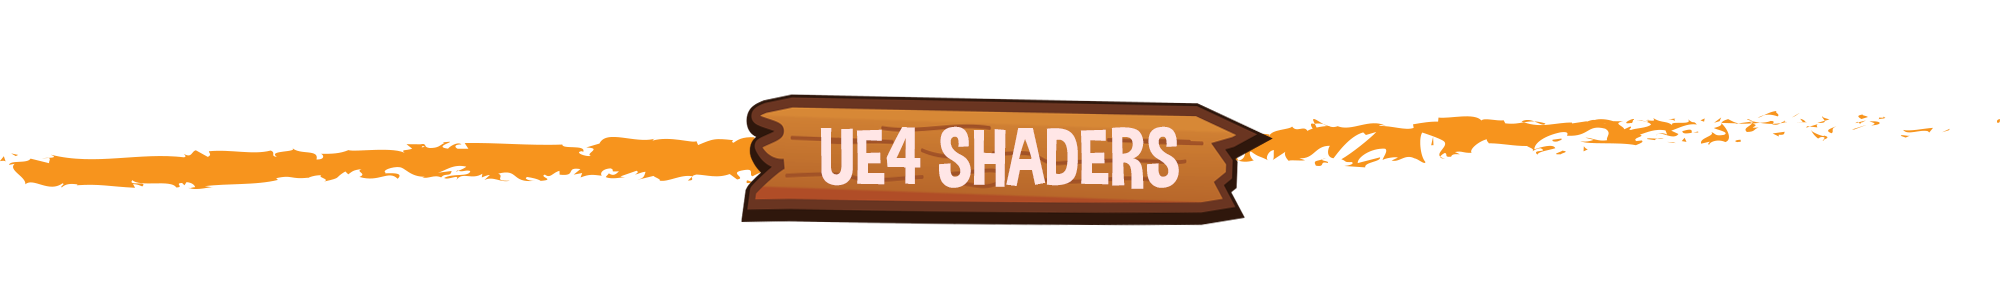 UE4 Shaders